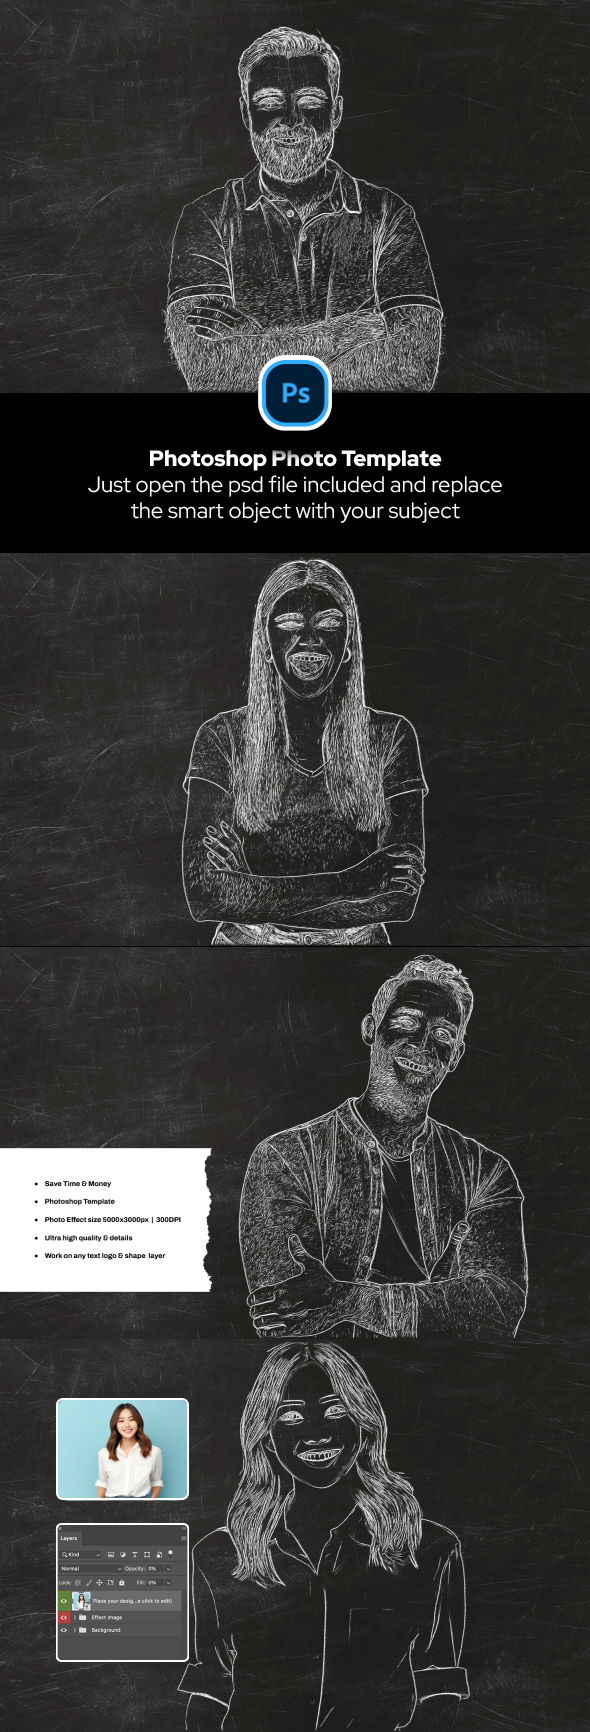 Chalk Sketch Photo Effect